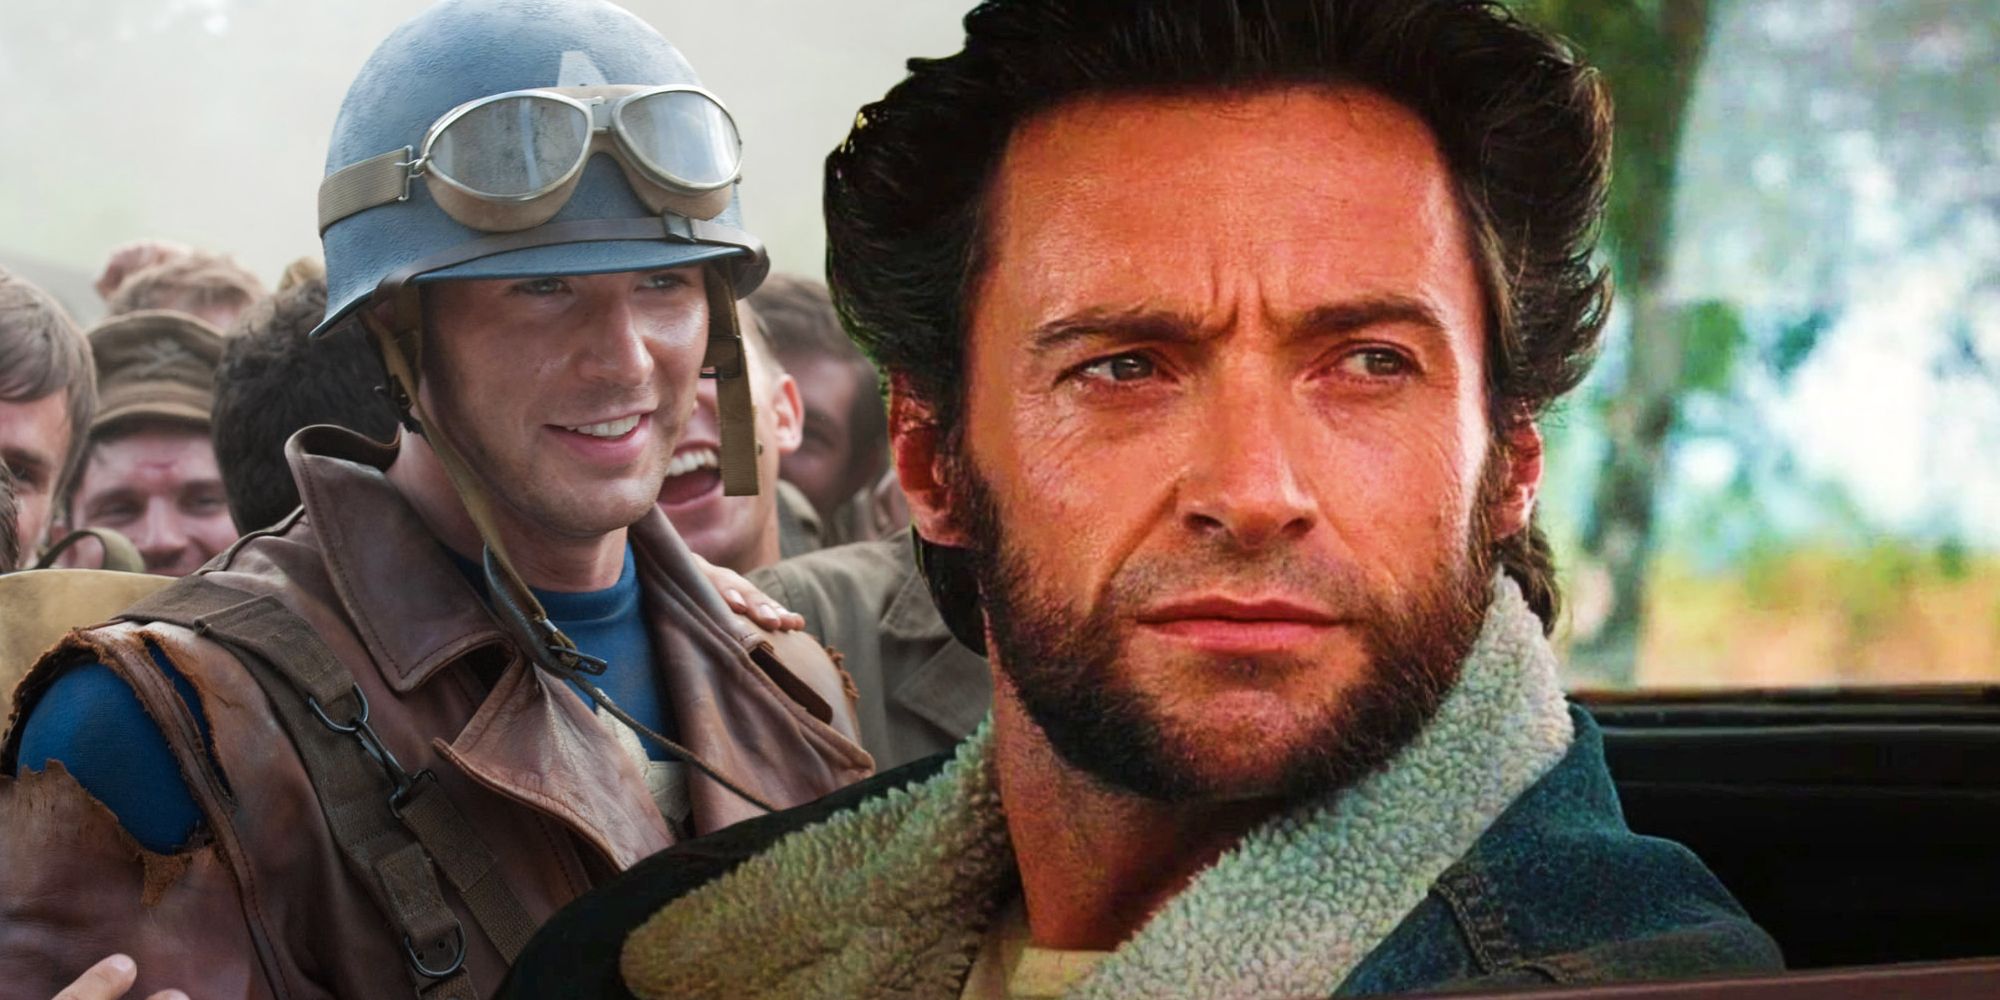 Chris Evans' Steve Rogers and Hugh Jackman's Wolverine